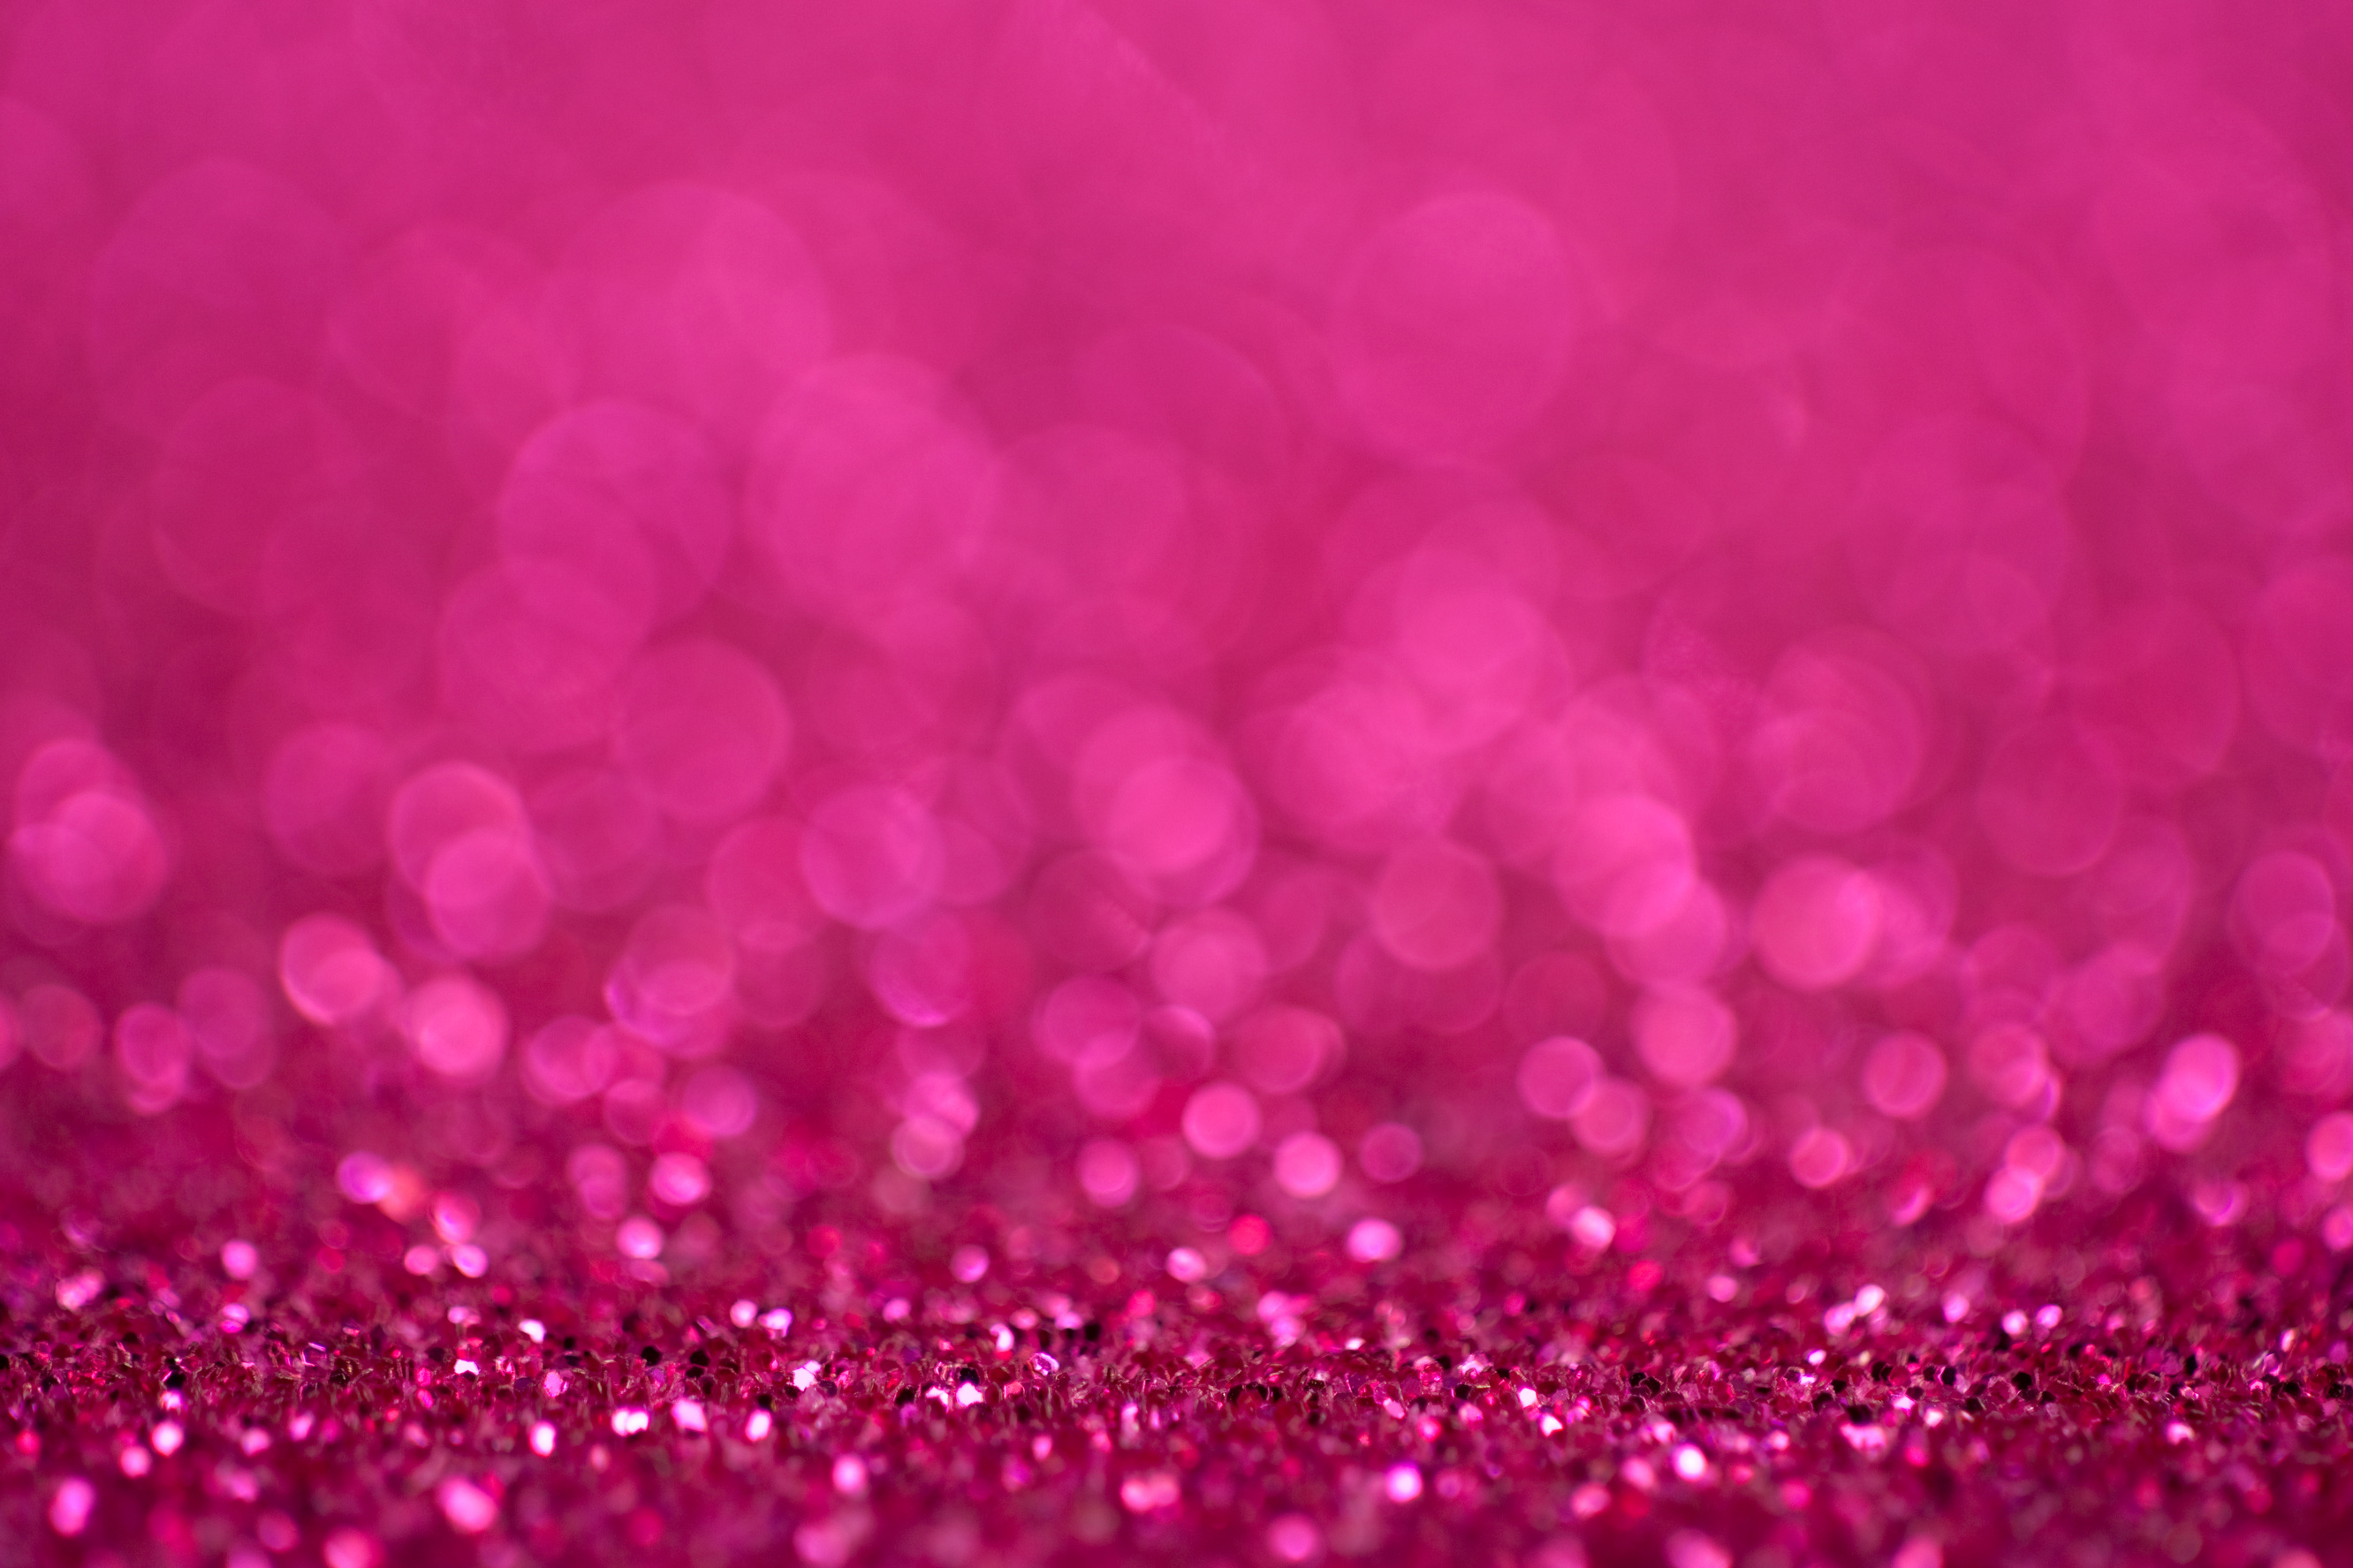 Glittery pink background